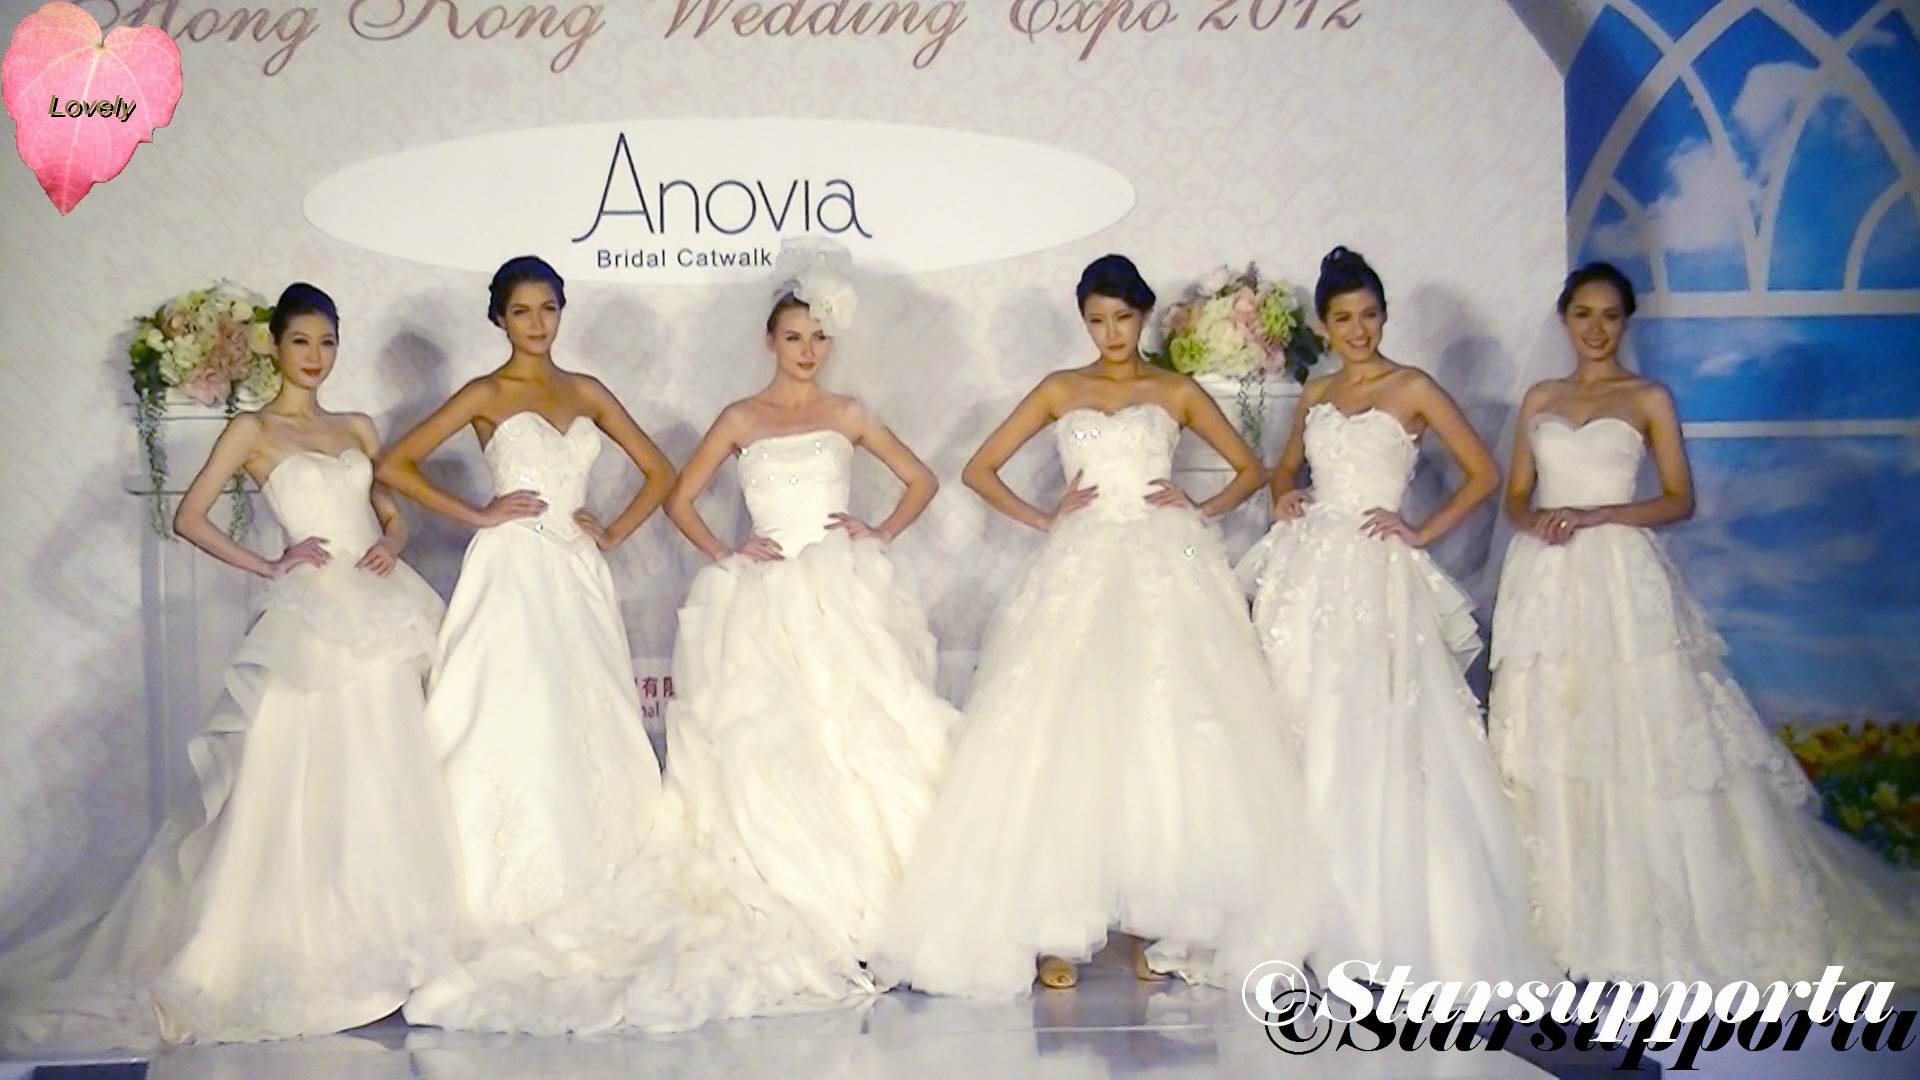 20121104 Hong Kong Wedding Expo - Anovia: Bridal Catwalk Show @ 香港會議展覽中心 HKCEC (video)